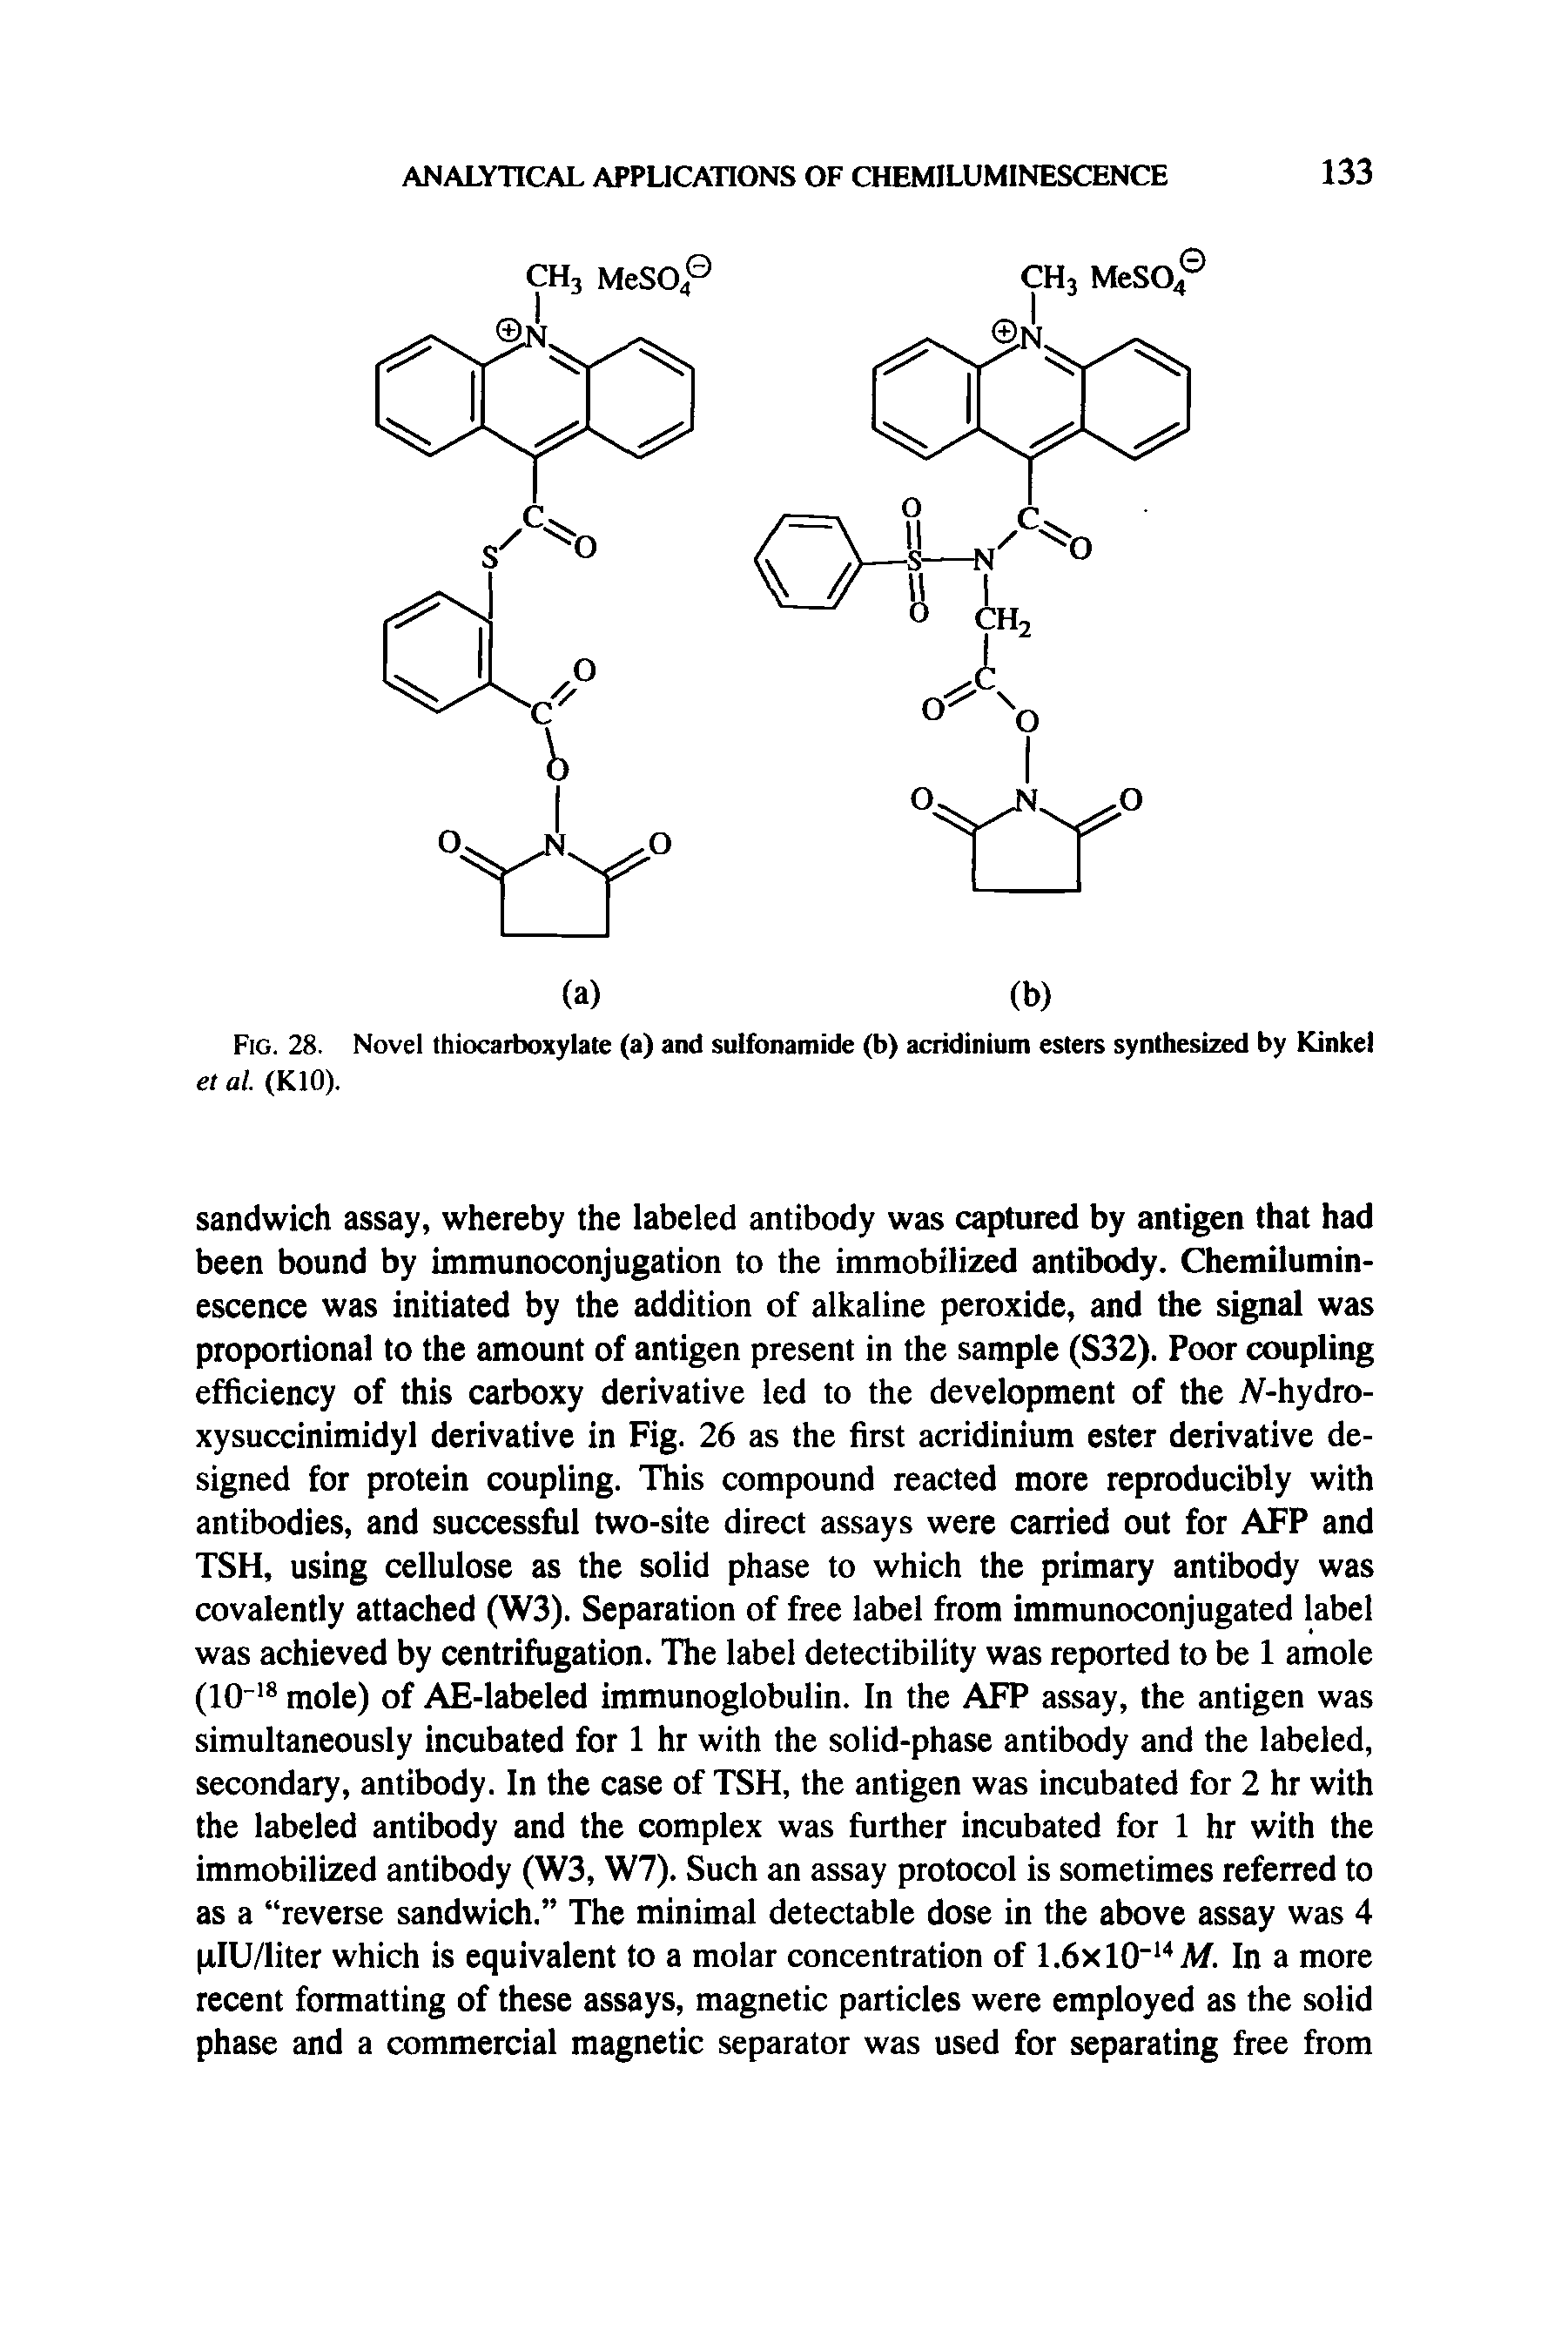 Fig. 28. Novel thiocarboxylate (a) and sulfonamide (b) acridinium esters synthesized by Kinkel et al. (KIO).